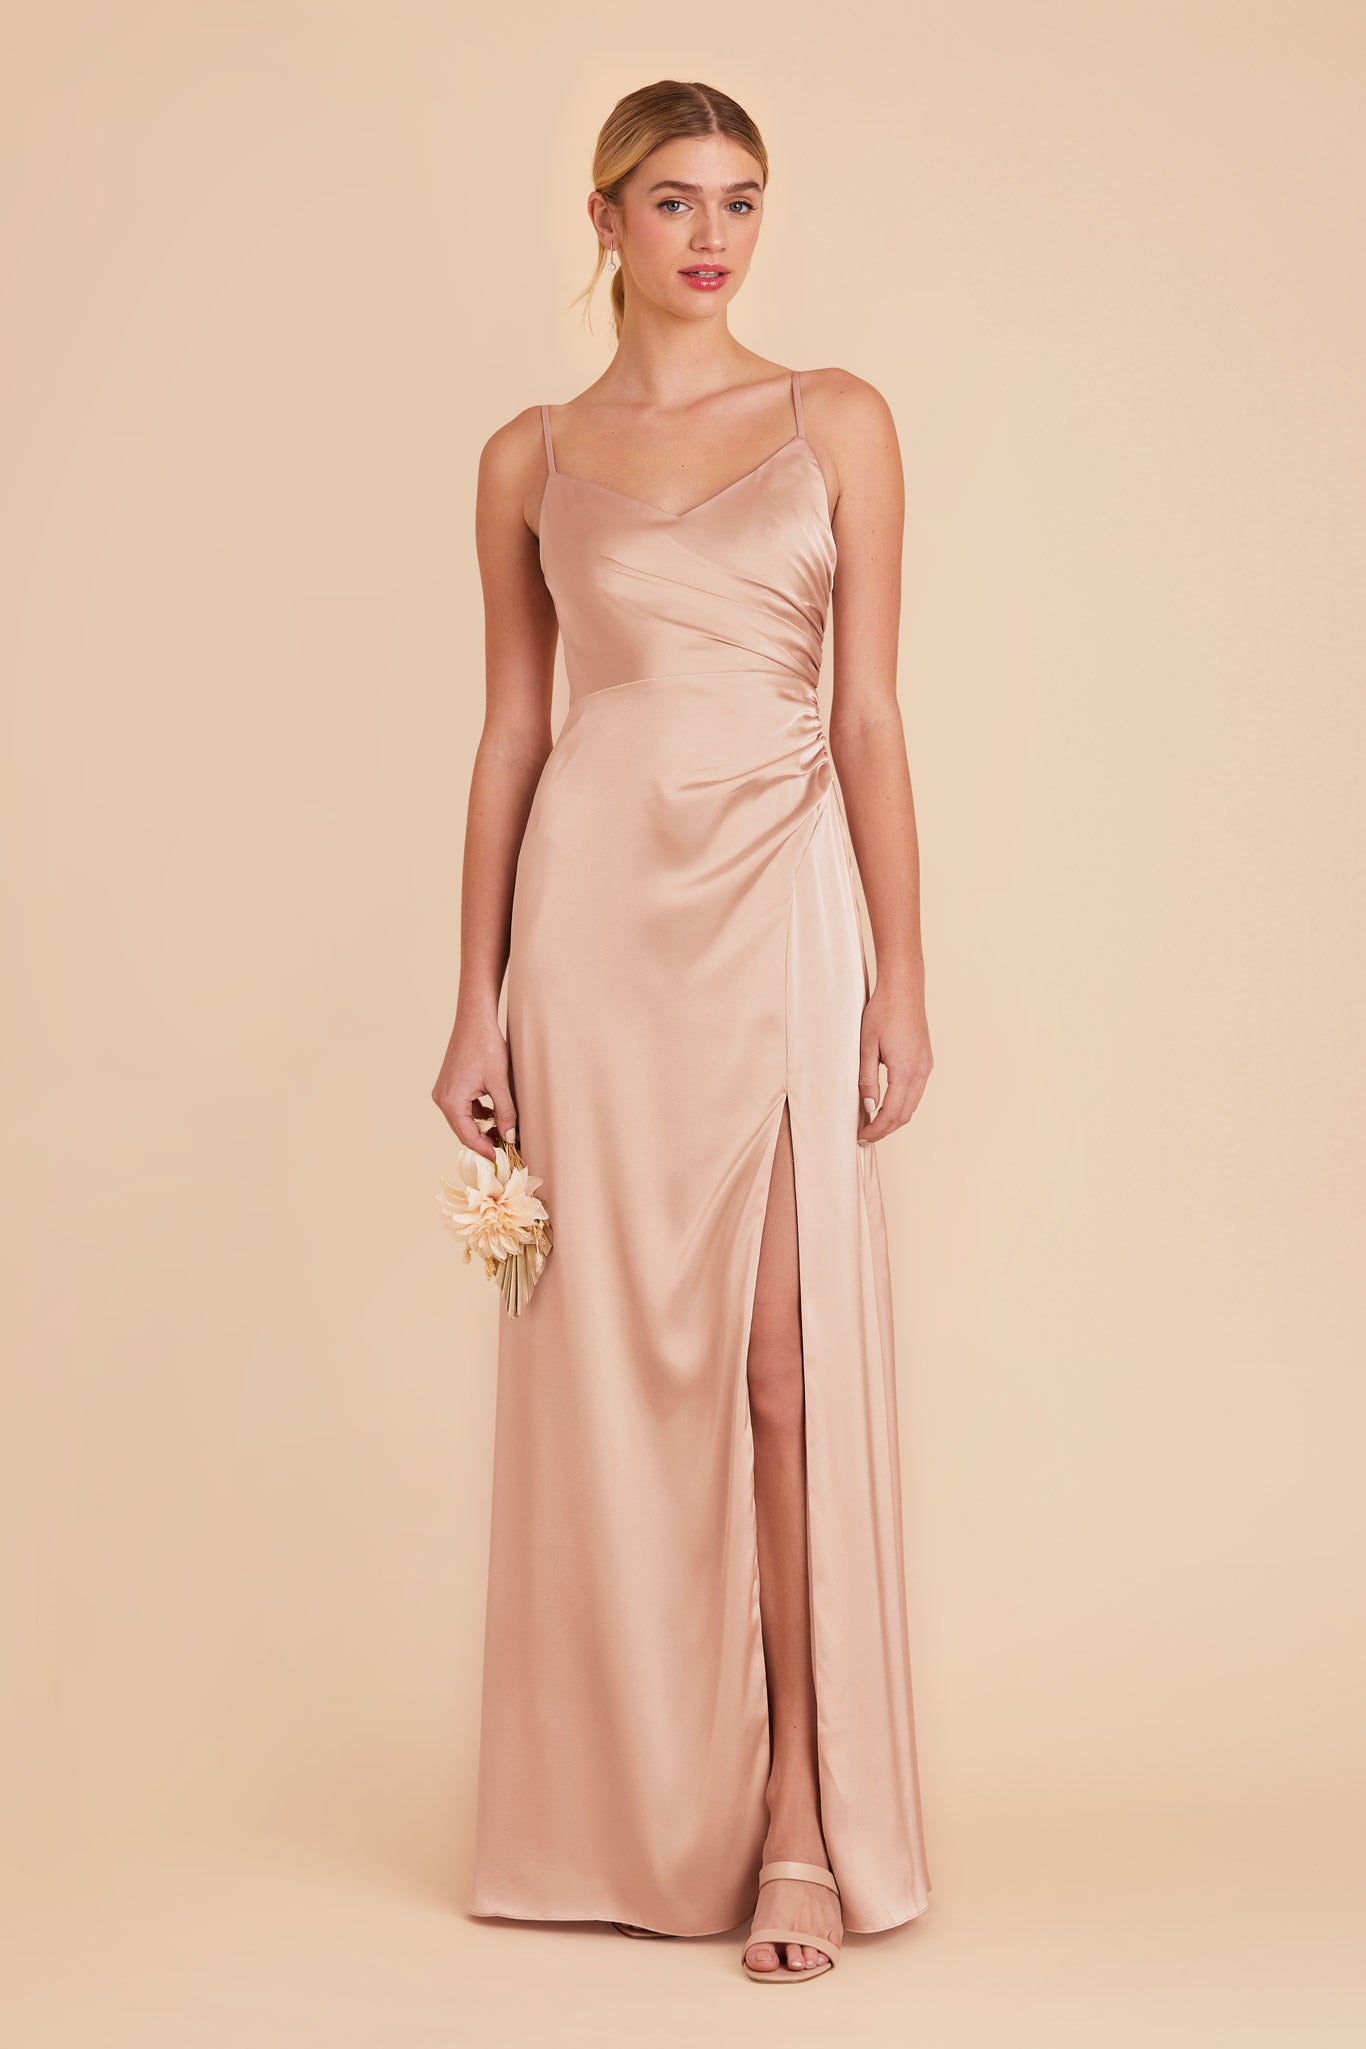 Rose Gold Catherine Matte Satin Dress by Birdy Grey